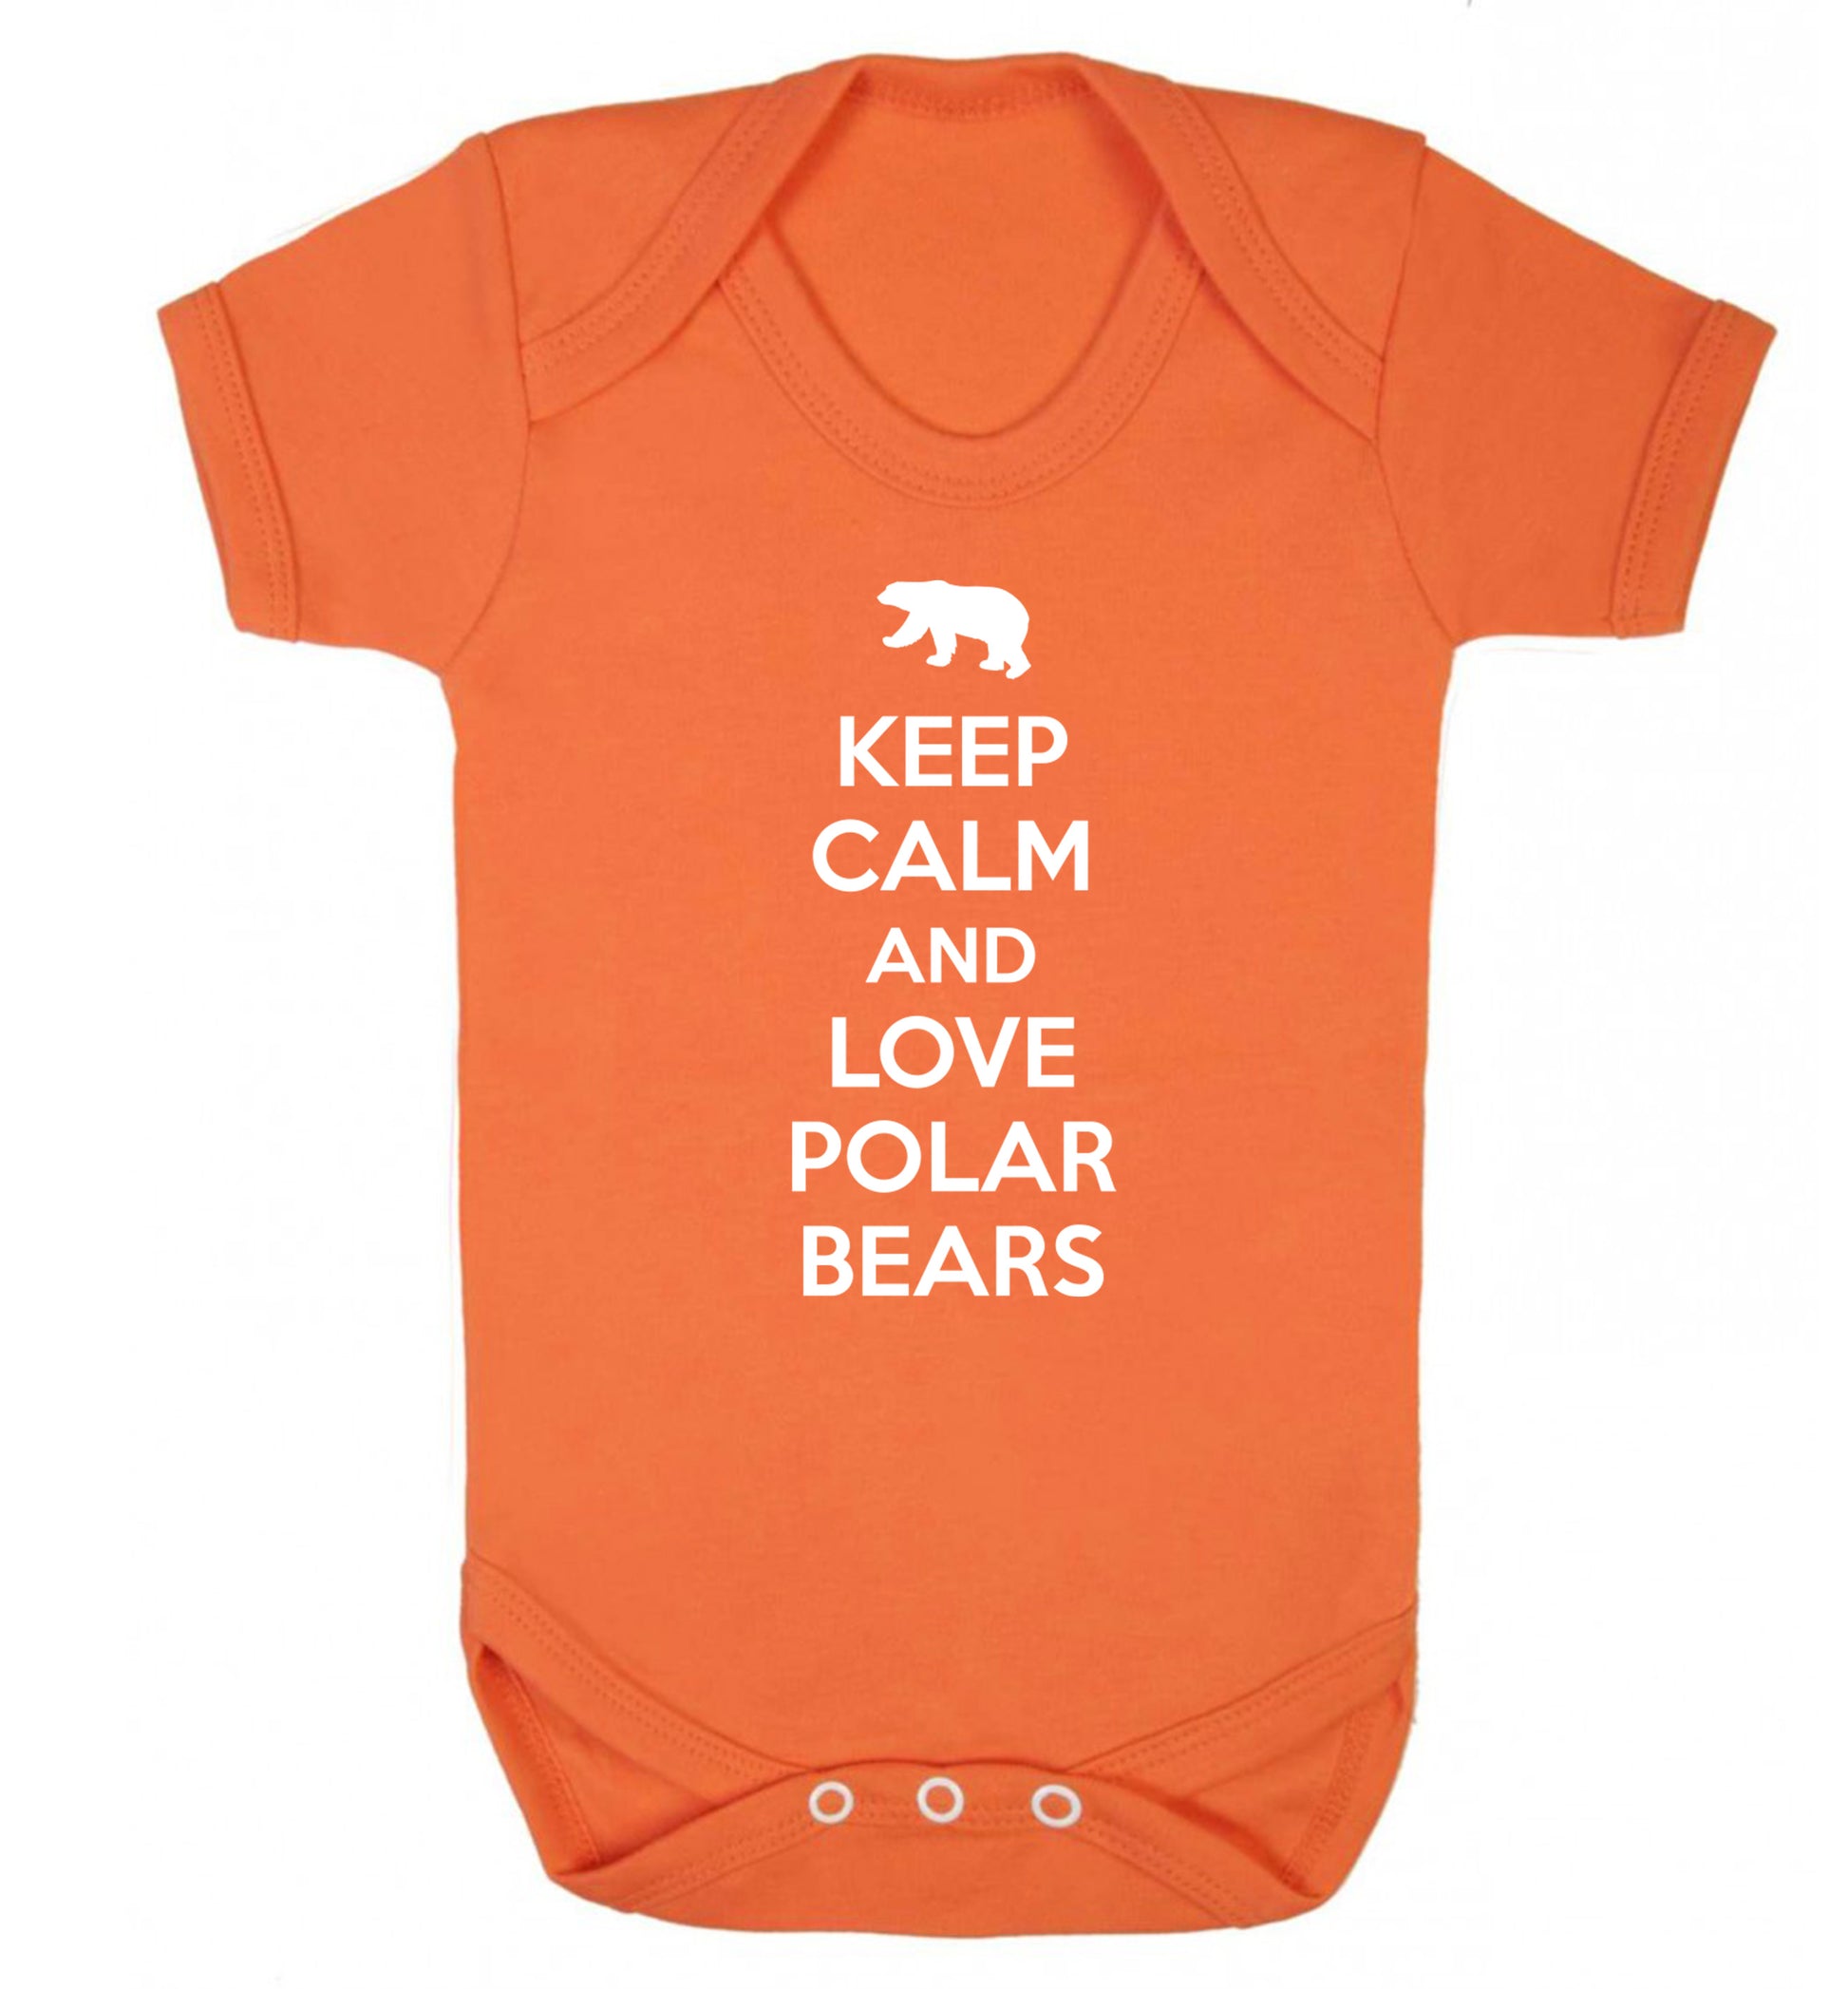 Keep calm and love polar bears Baby Vest orange 18-24 months